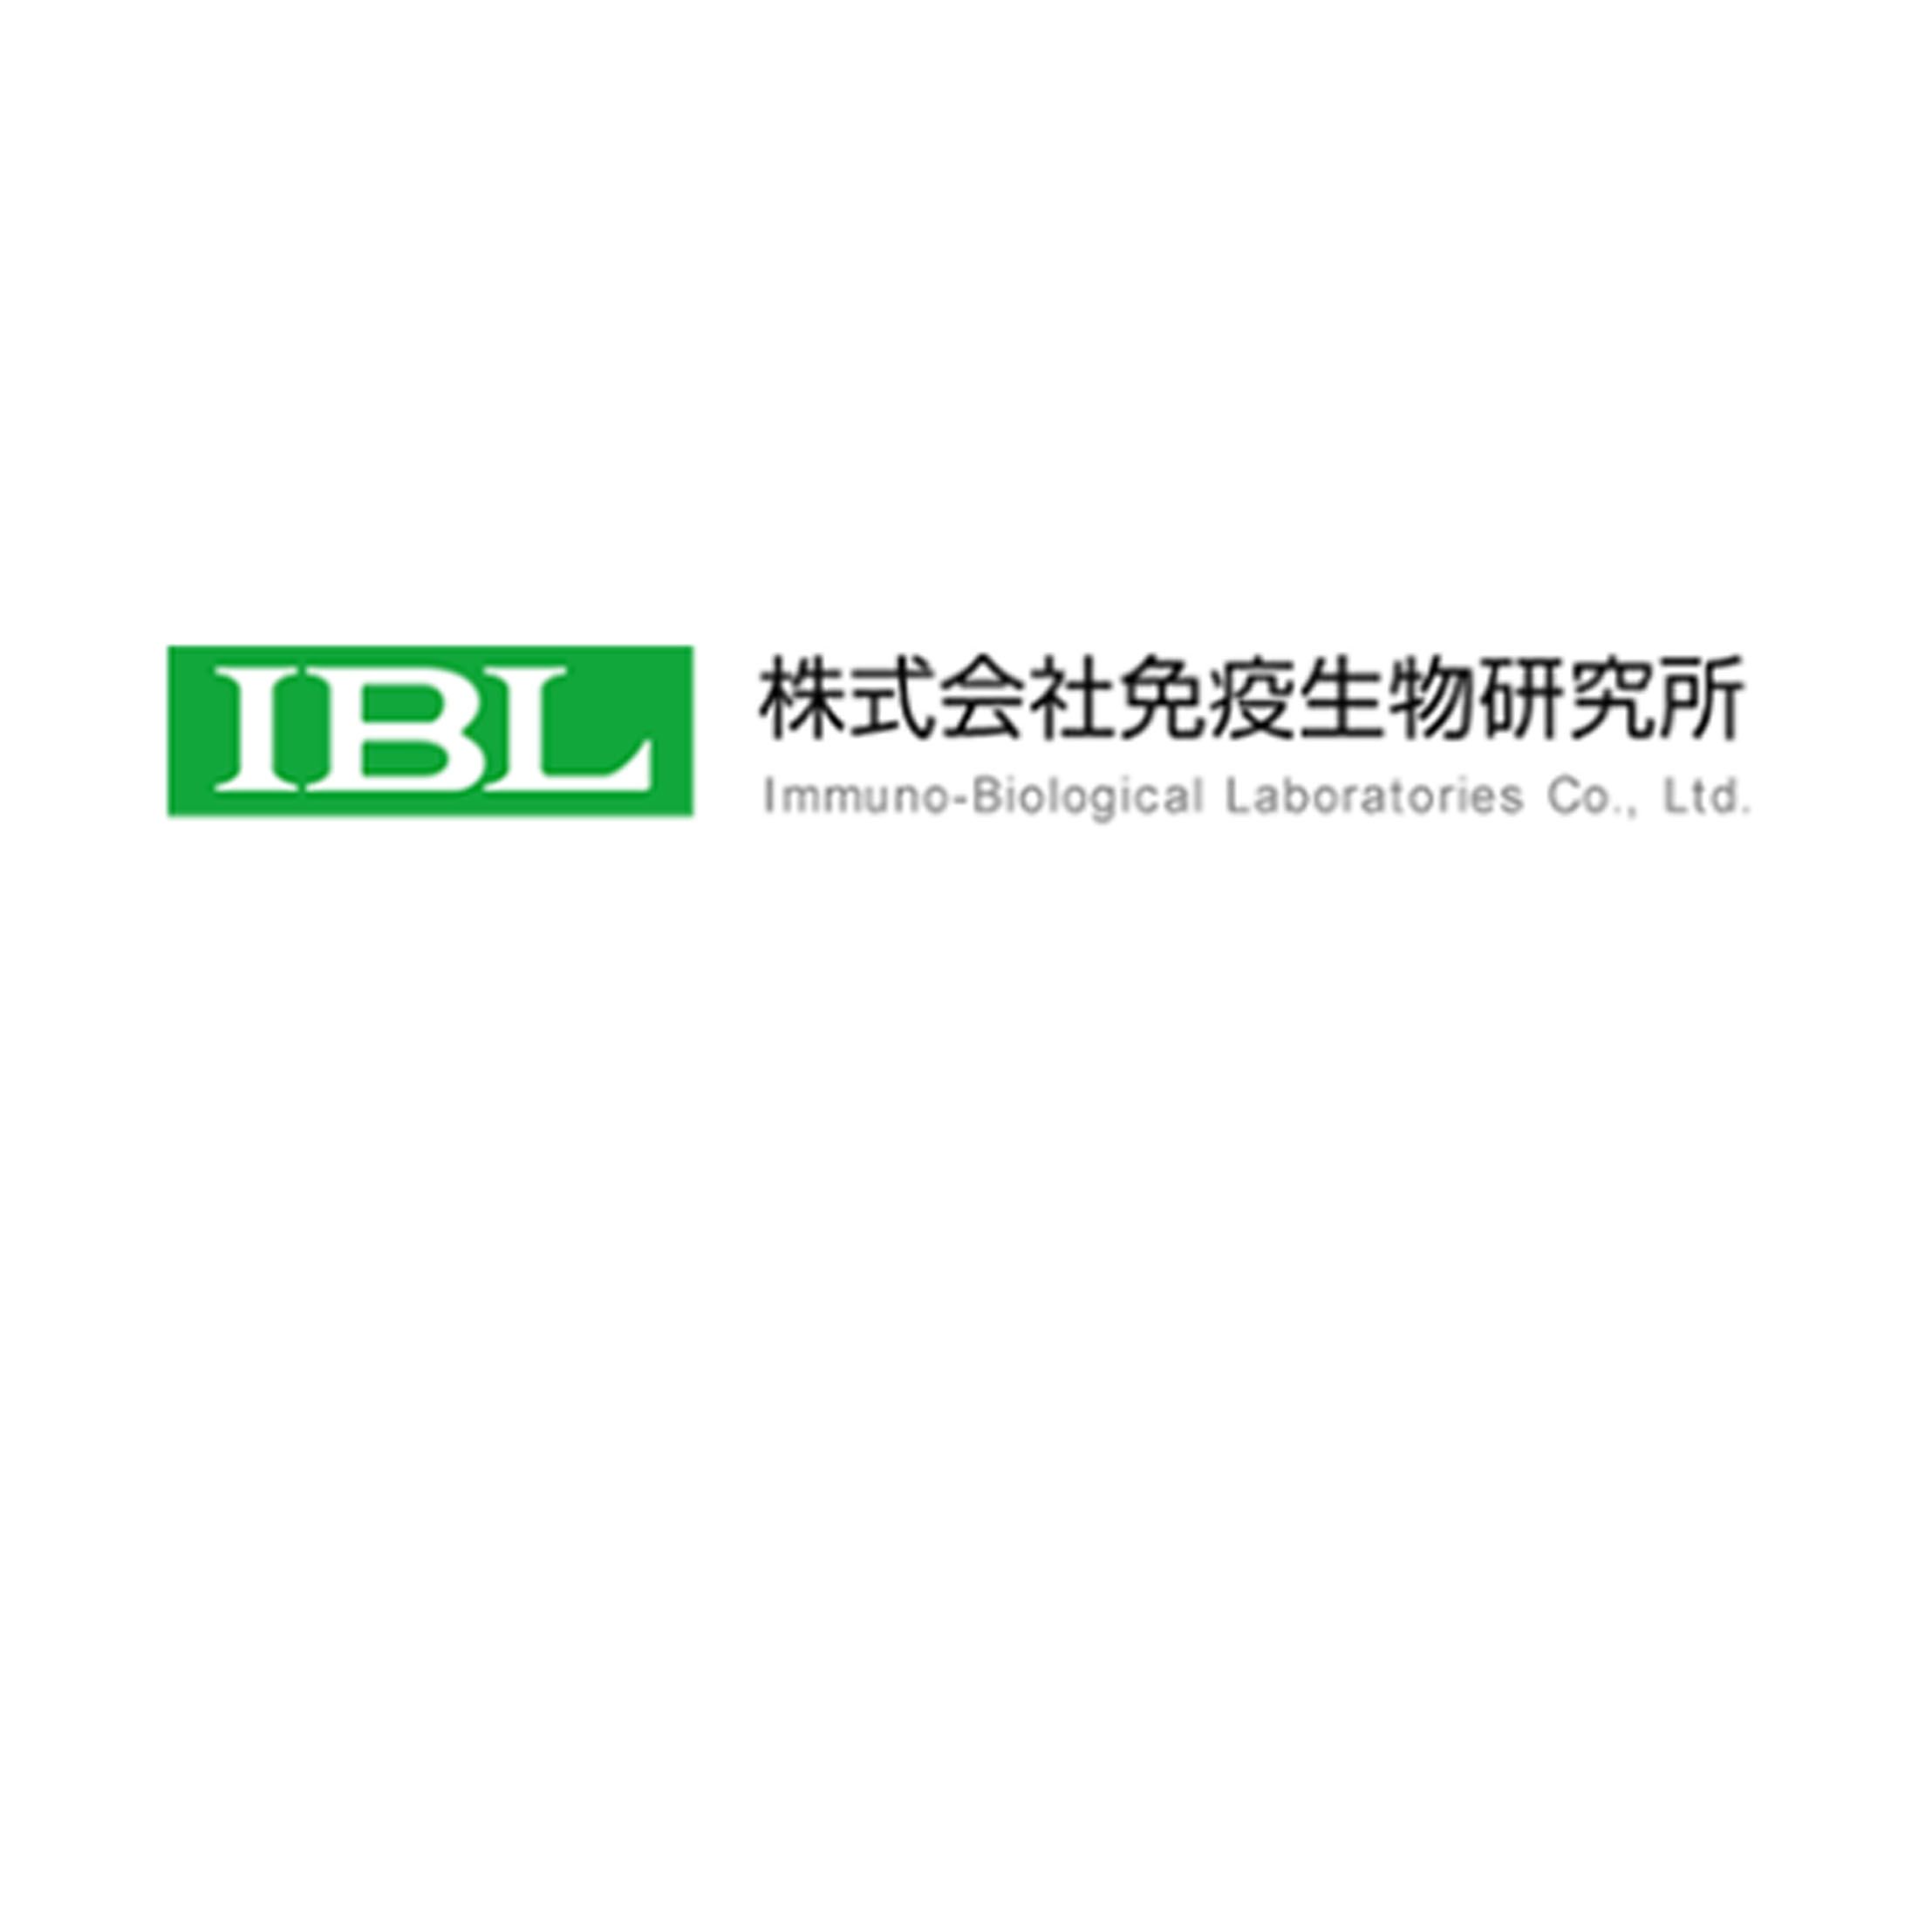 IBL-Japan胚胎抗原的生产、研究及纯化\抗体及试剂,现货